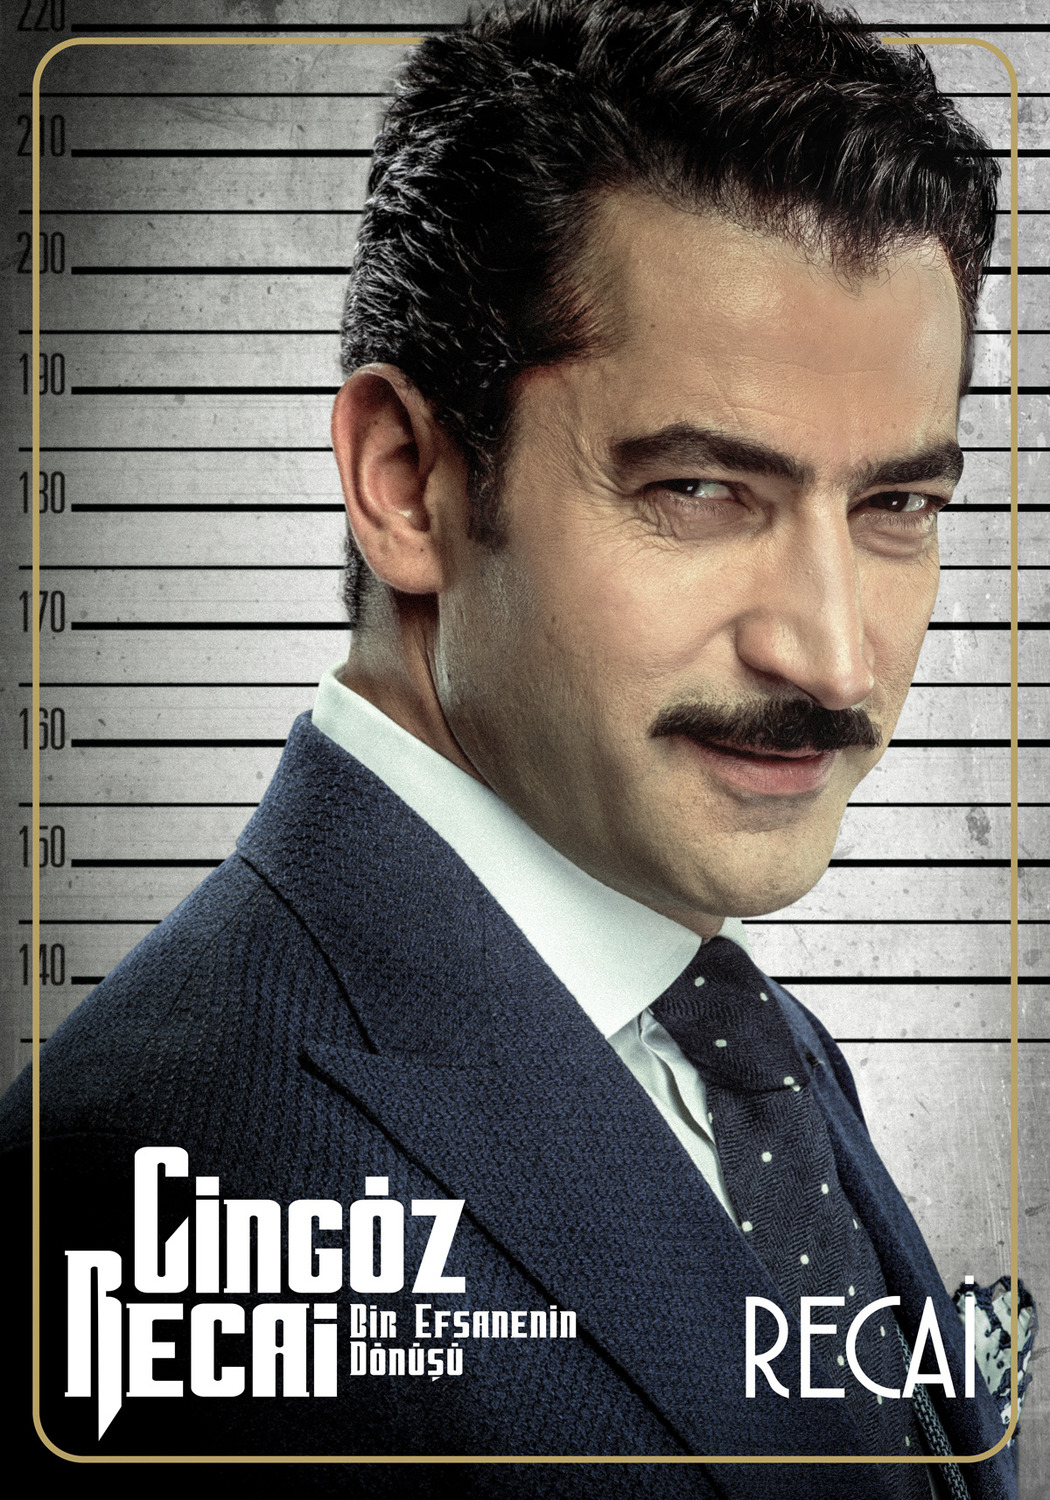 Extra Large Movie Poster Image for Cingöz Recai (#9 of 11)